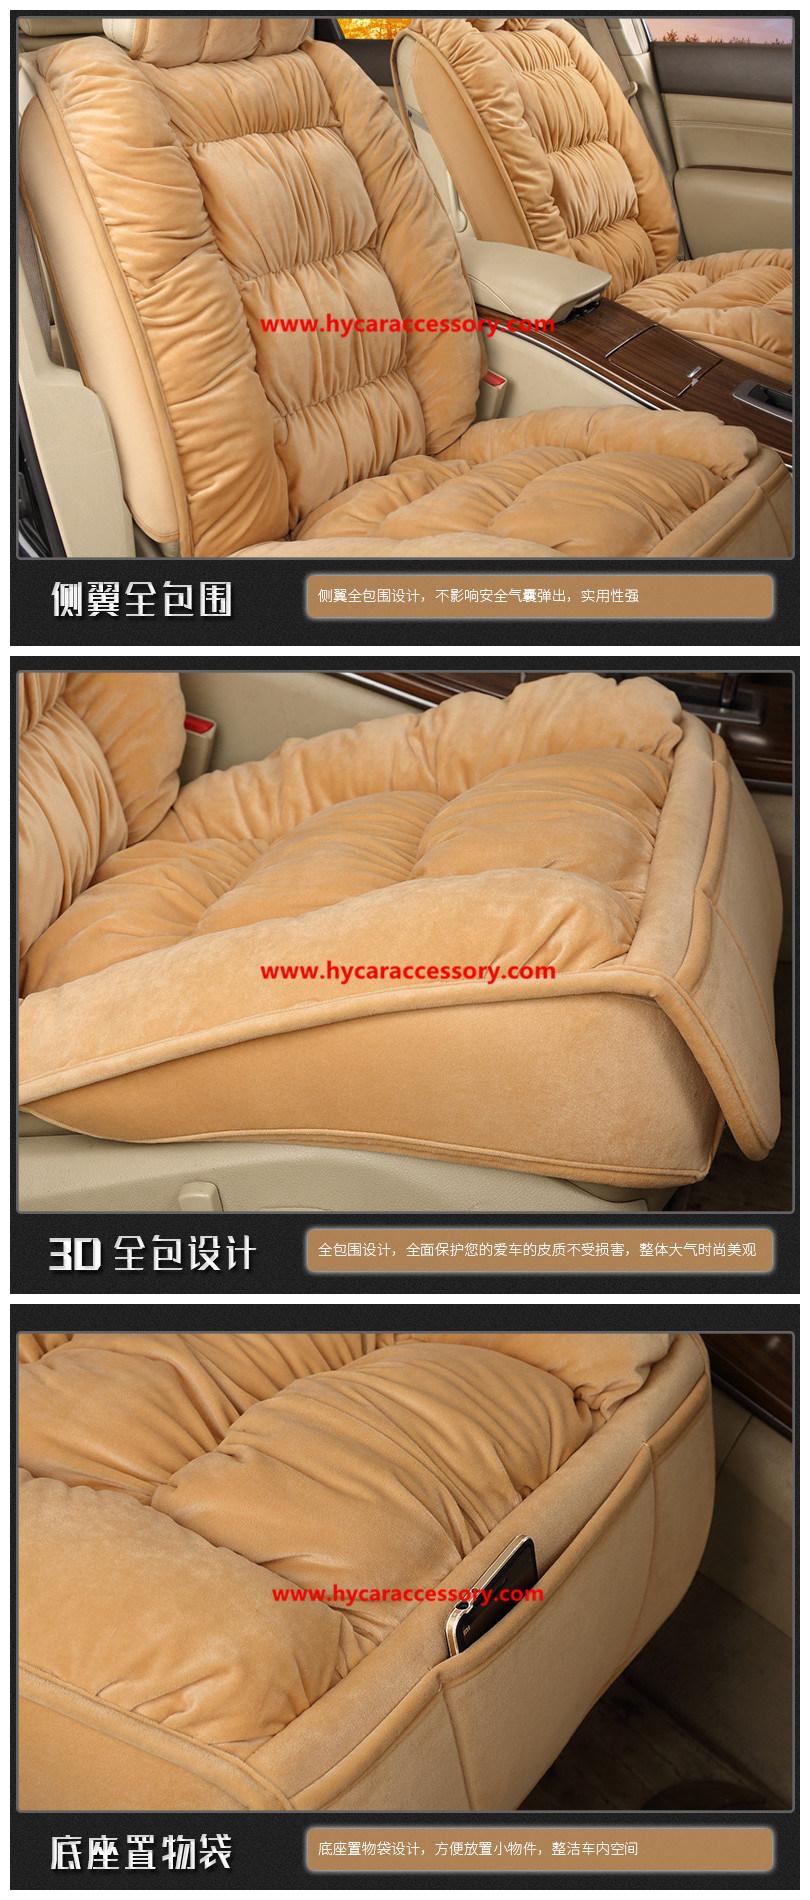 Car Decoration Cushion Universal Warm Soft Car Auto Seat Cover